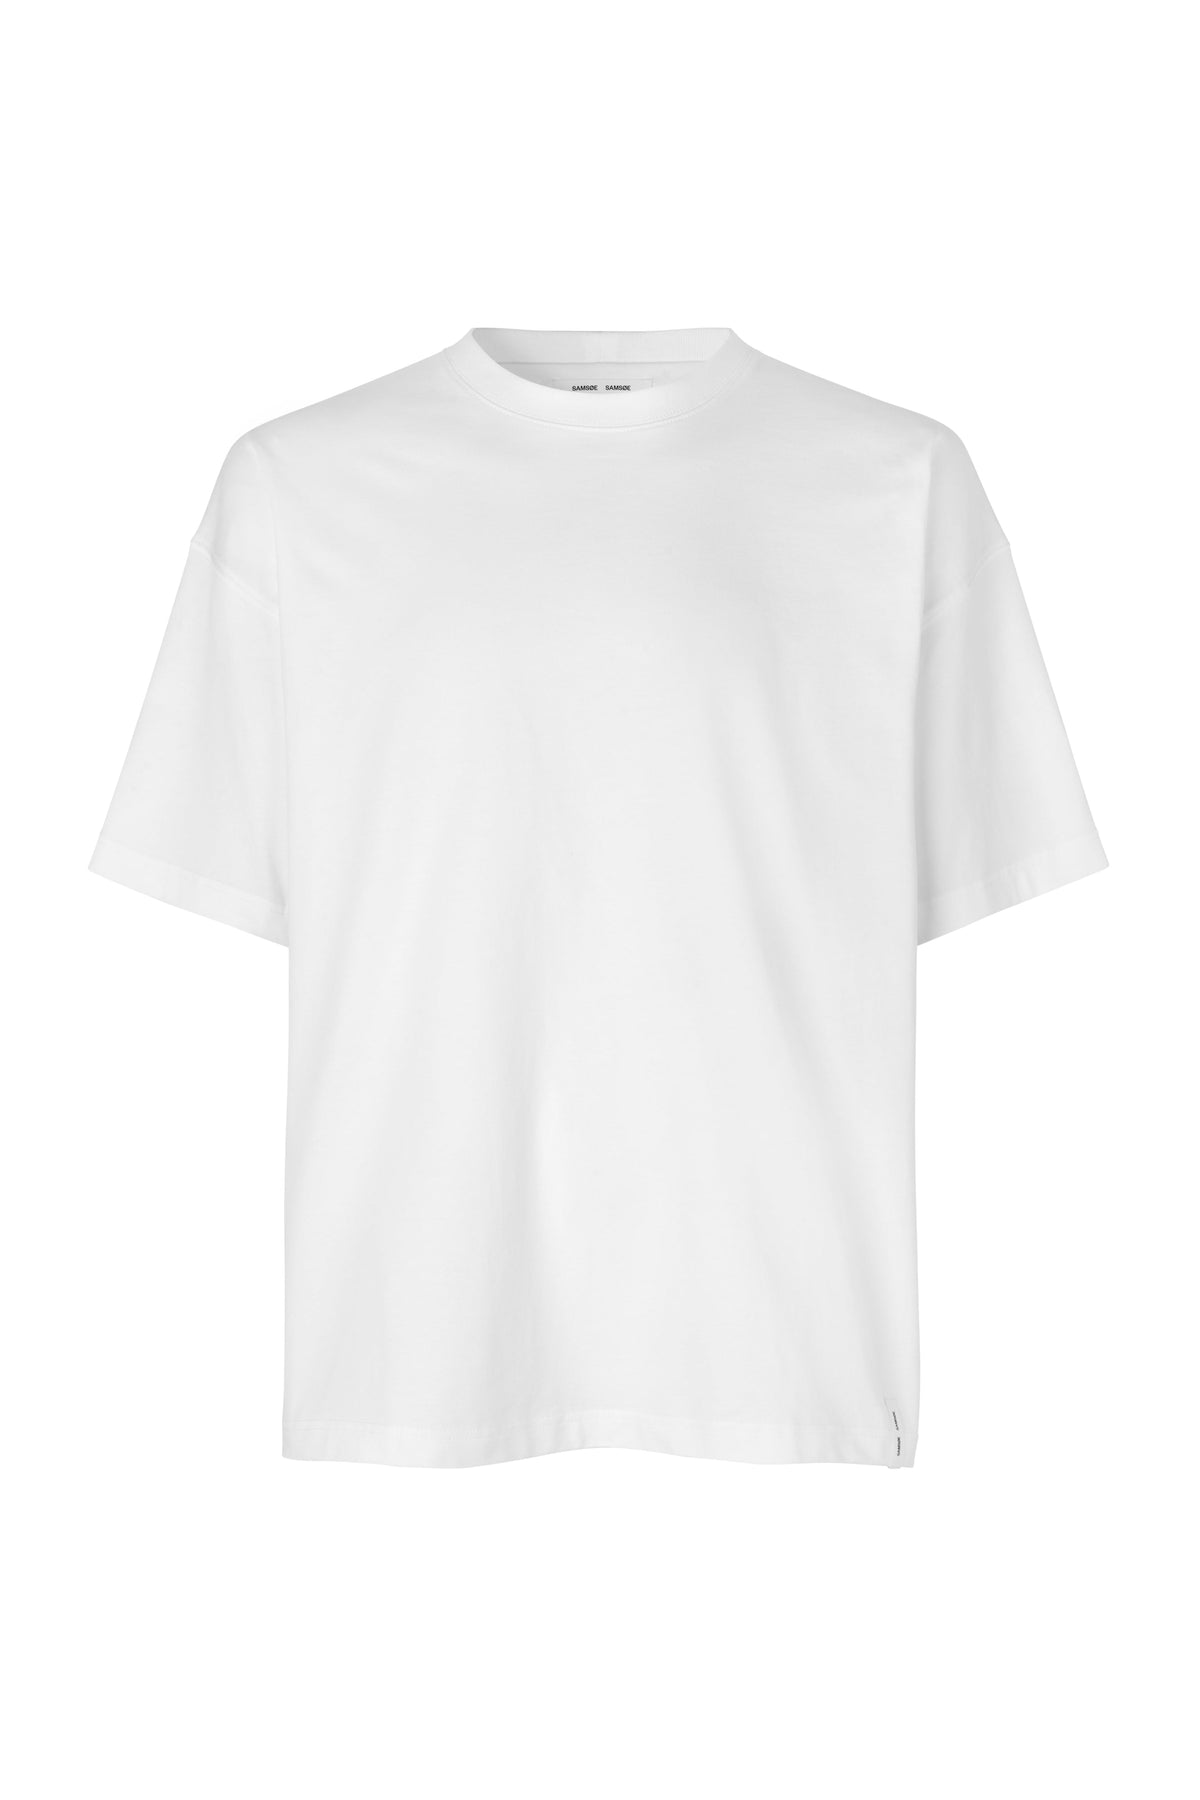 Hjalmer T-shirt 11725 - White